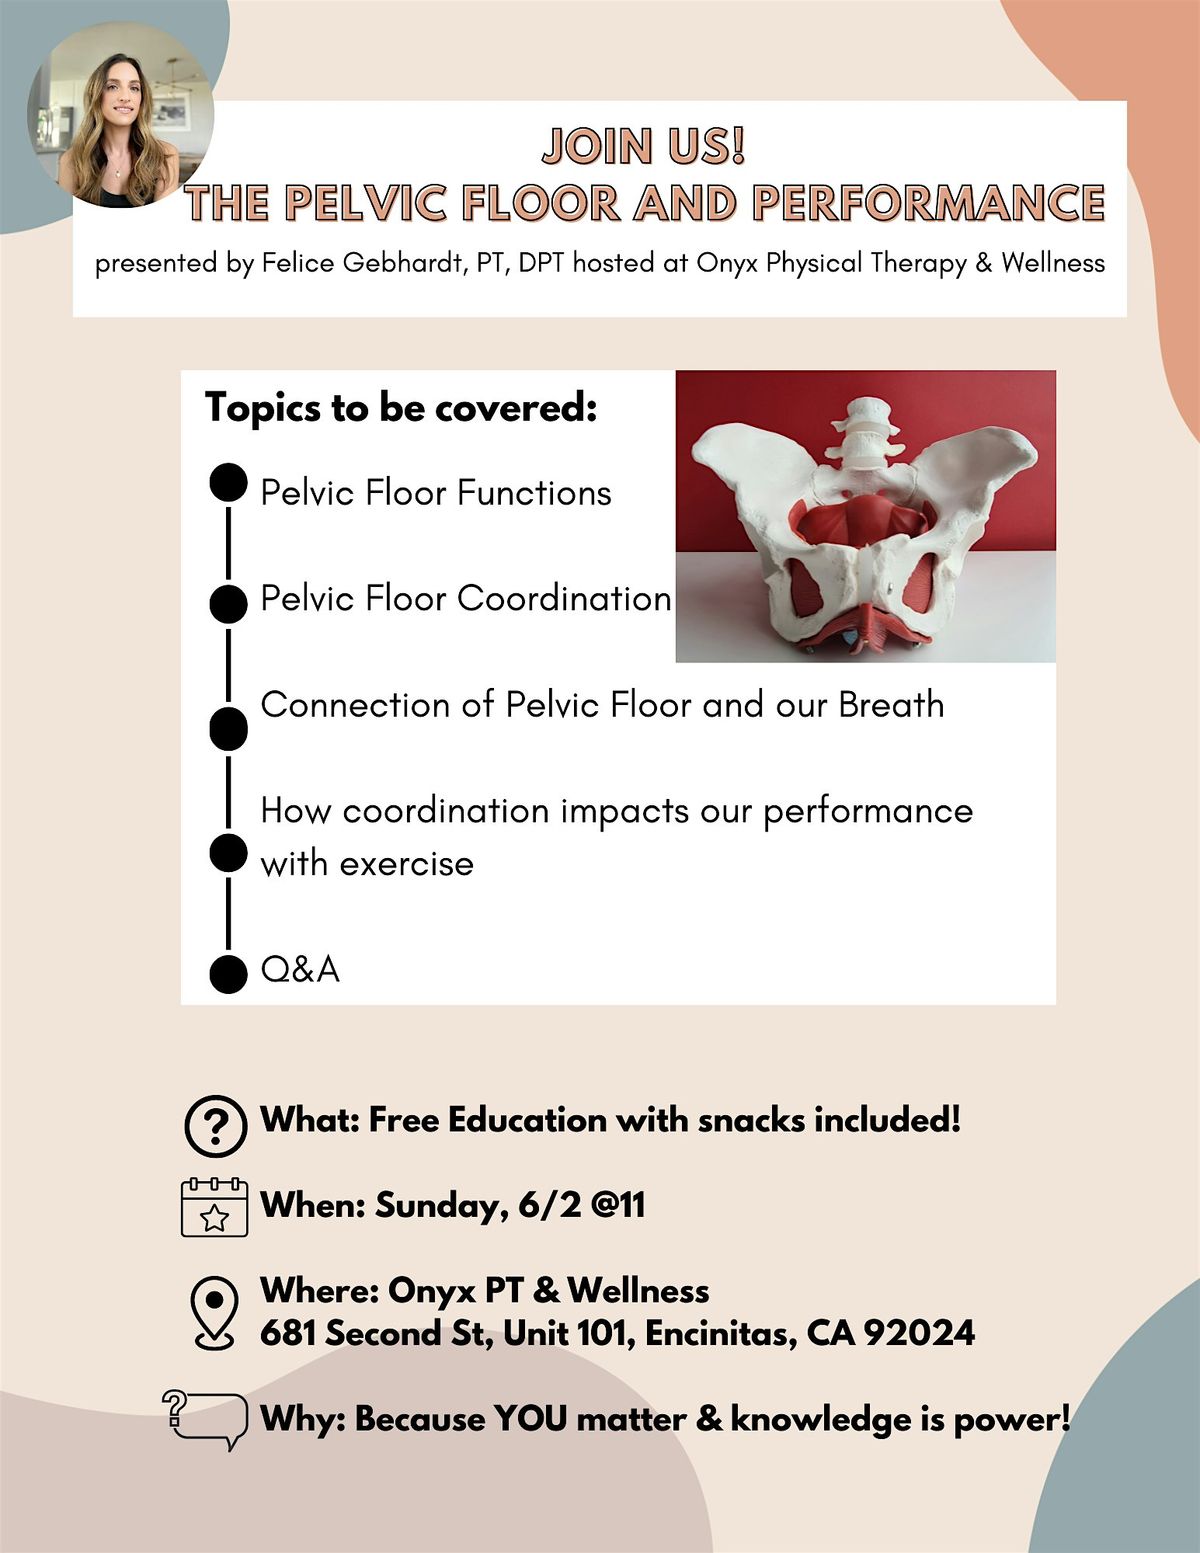 The Pelvic Floor and Performance